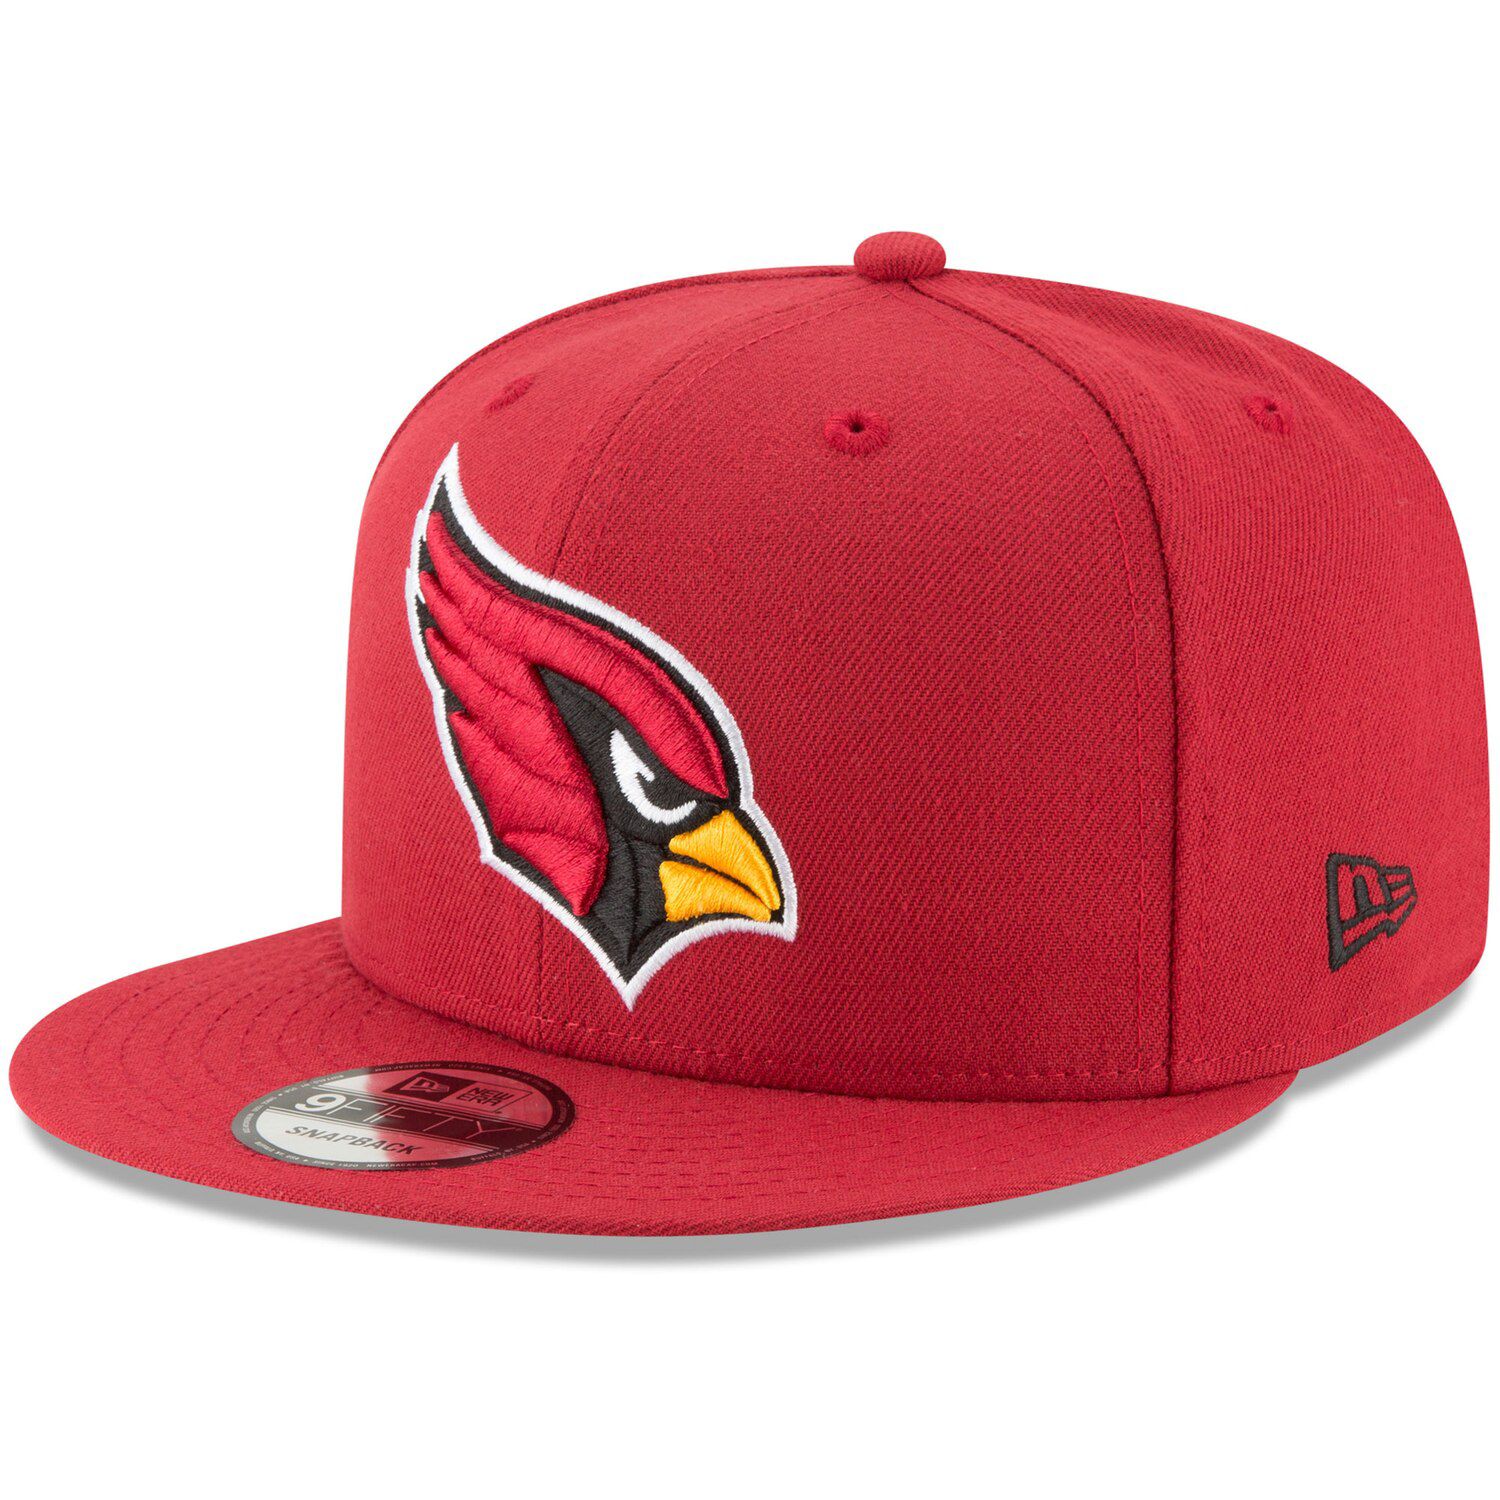 Мужская регулируемая шляпа Snapback New Era Cardinal Arizona Cardinals Basic 9FIFTY мужская кепка cardinal черная arizona cardinals flawless 9fifty snapback new era